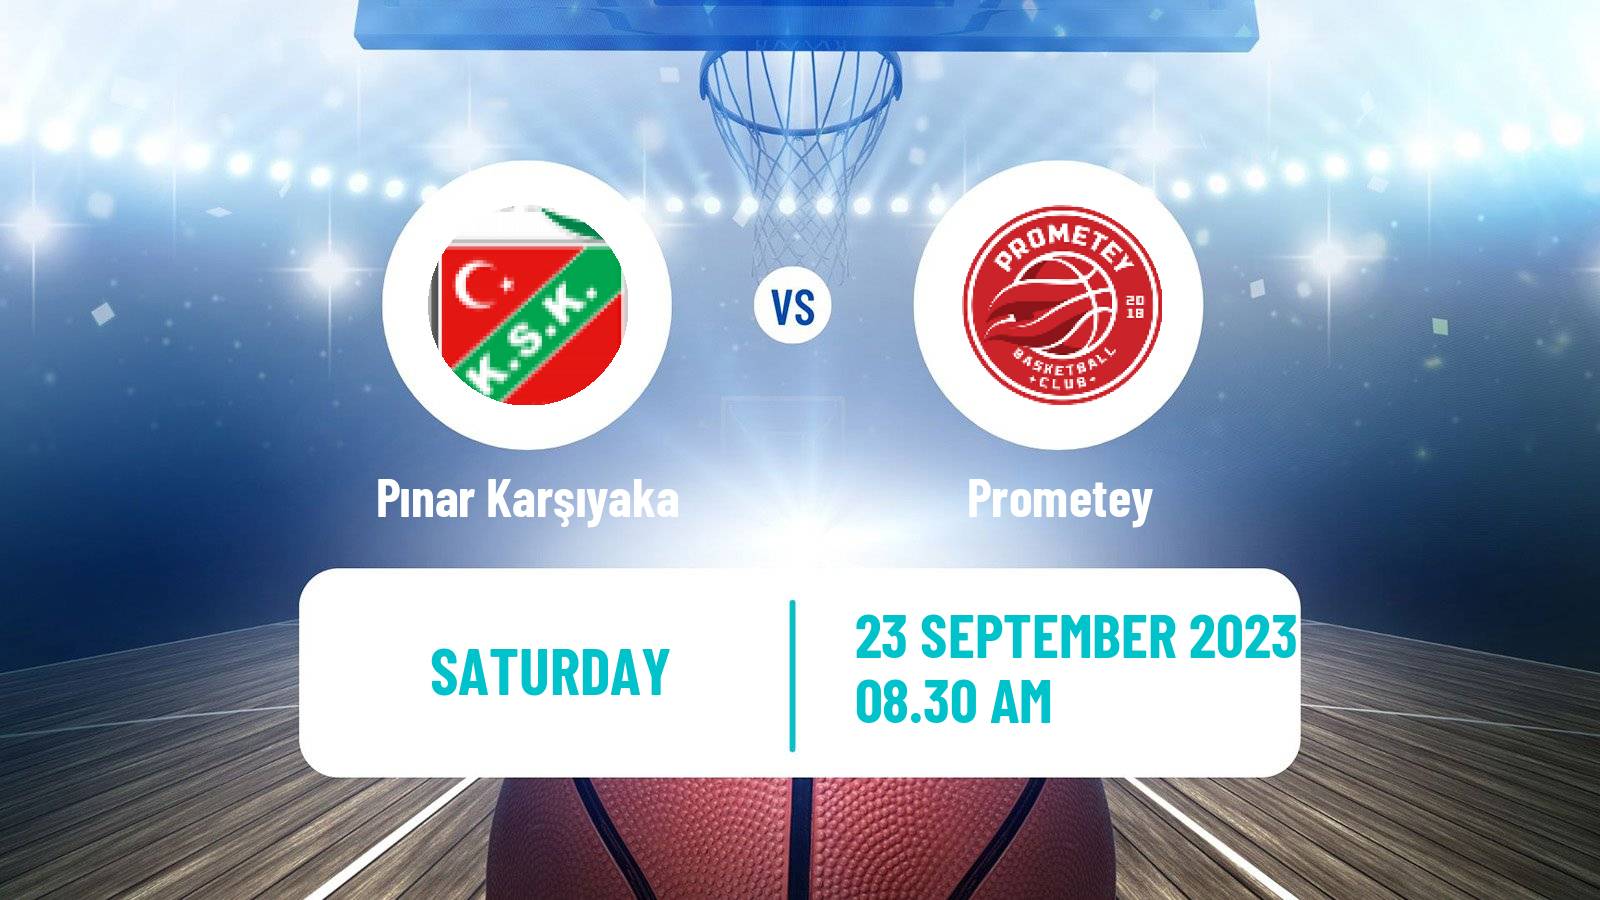 Basketball Club Friendly Basketball Pınar Karşıyaka - Prometey